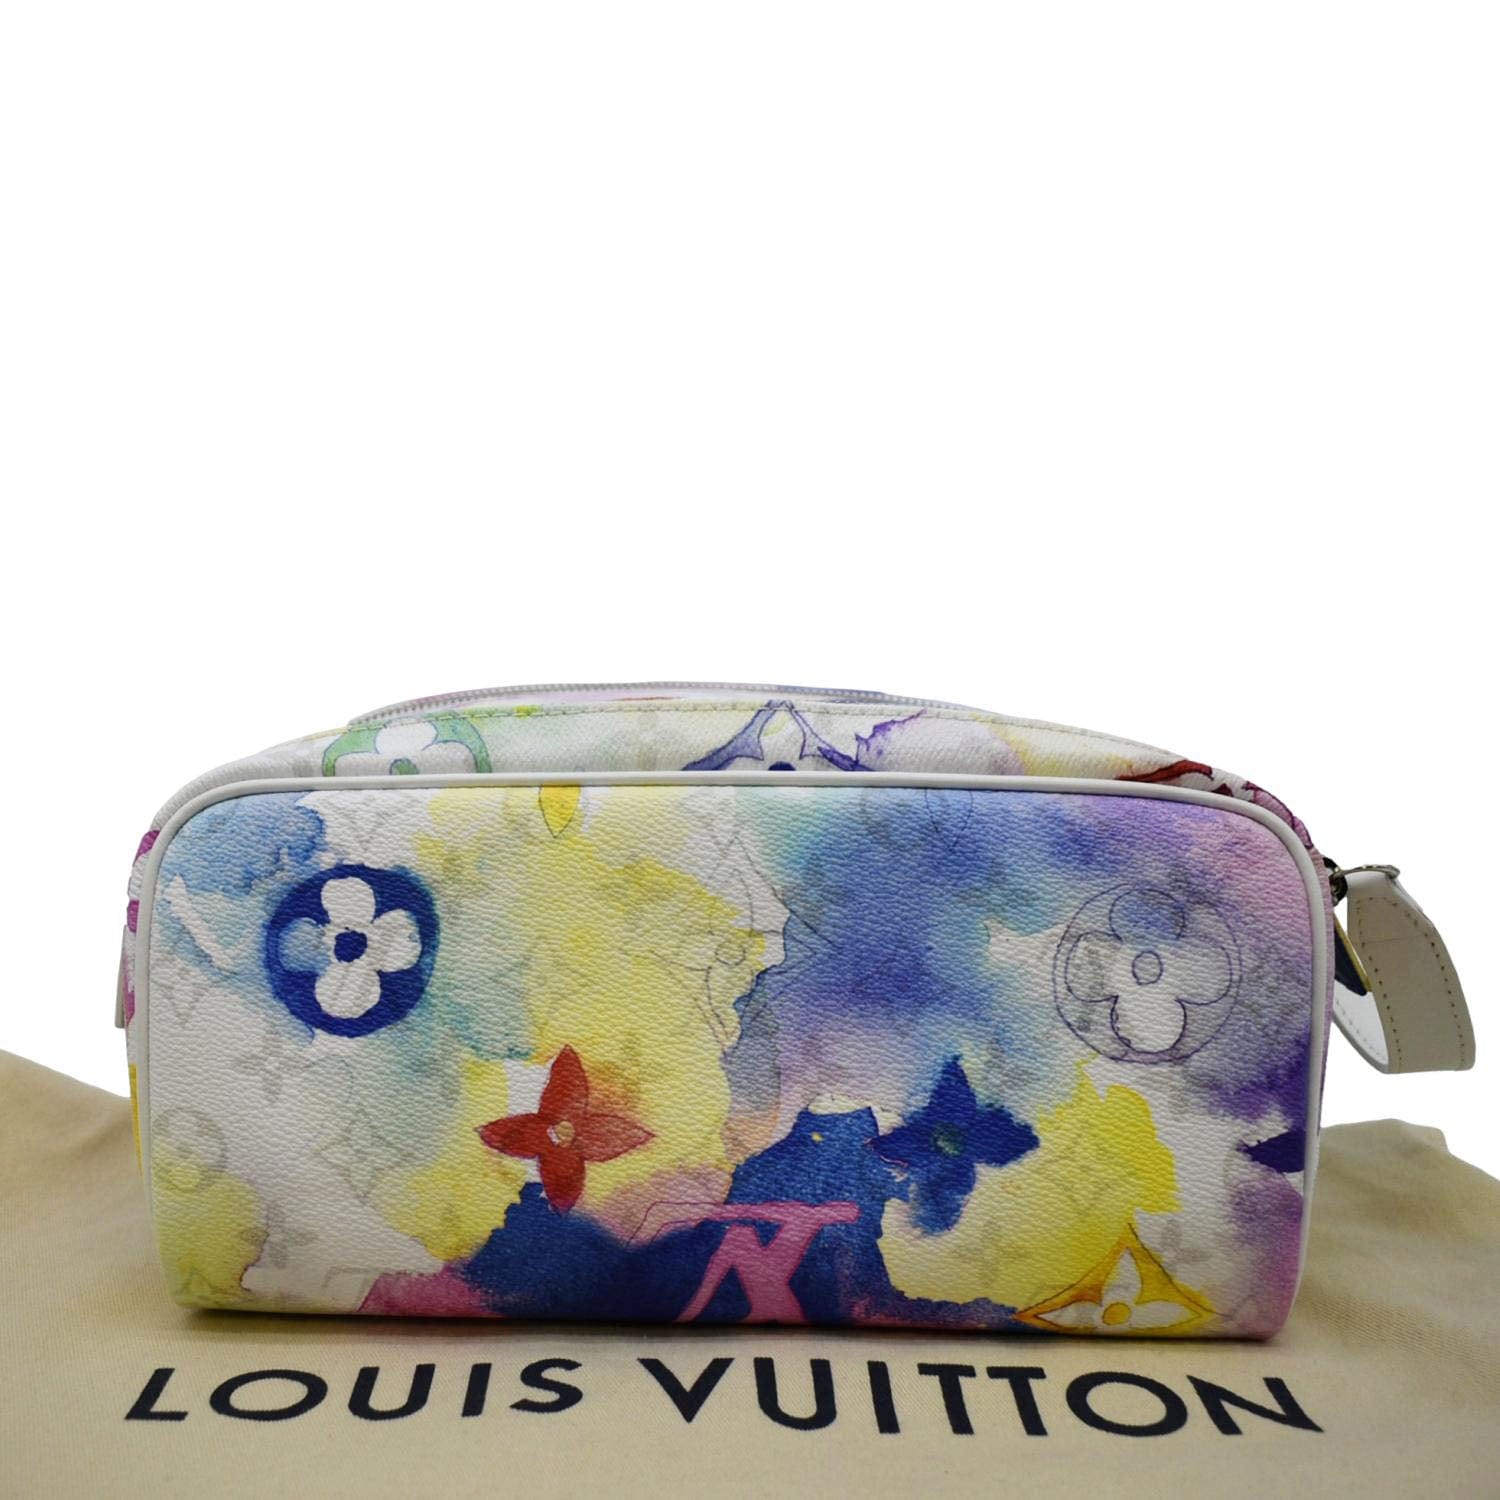 Louis Vuitton makeup bag - LV